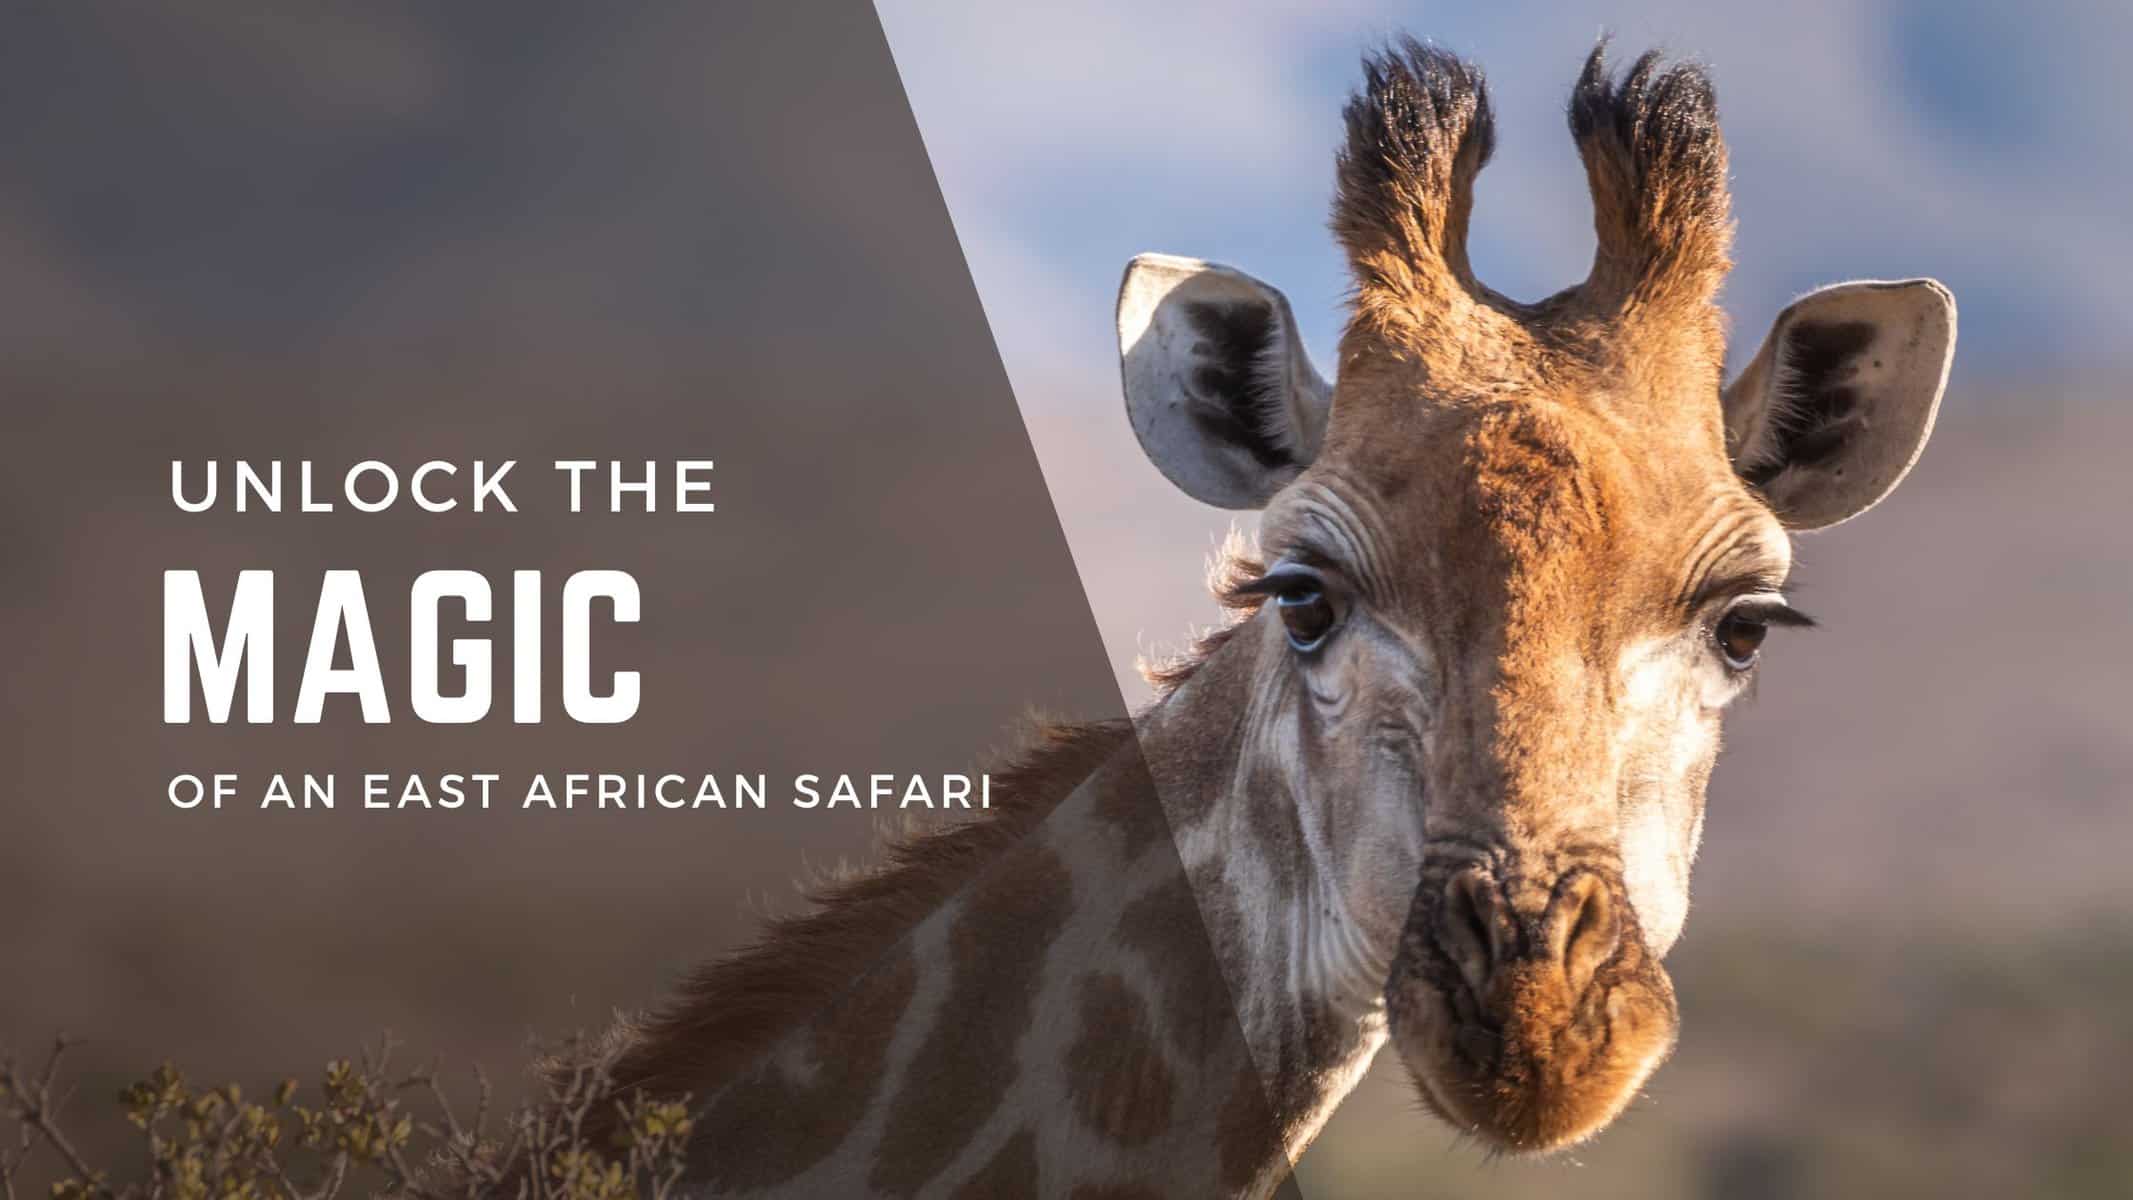 Unlock the magic of an east African safari